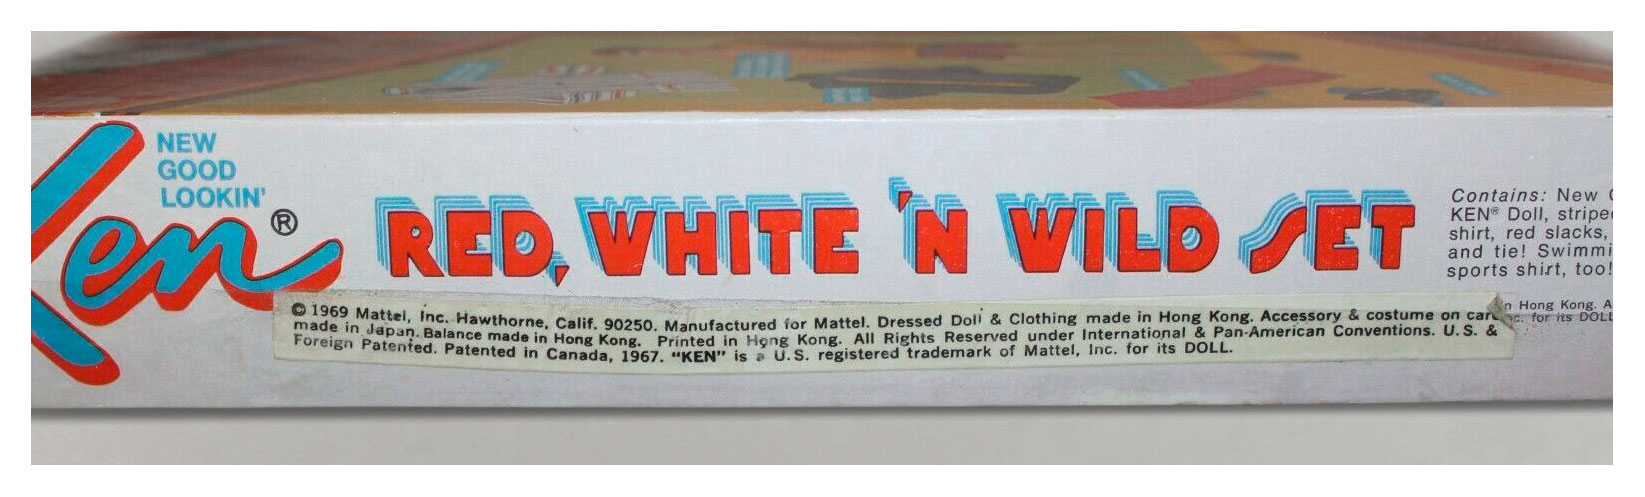 1970 #1589 Sears Red, White 'N Wild Set box side